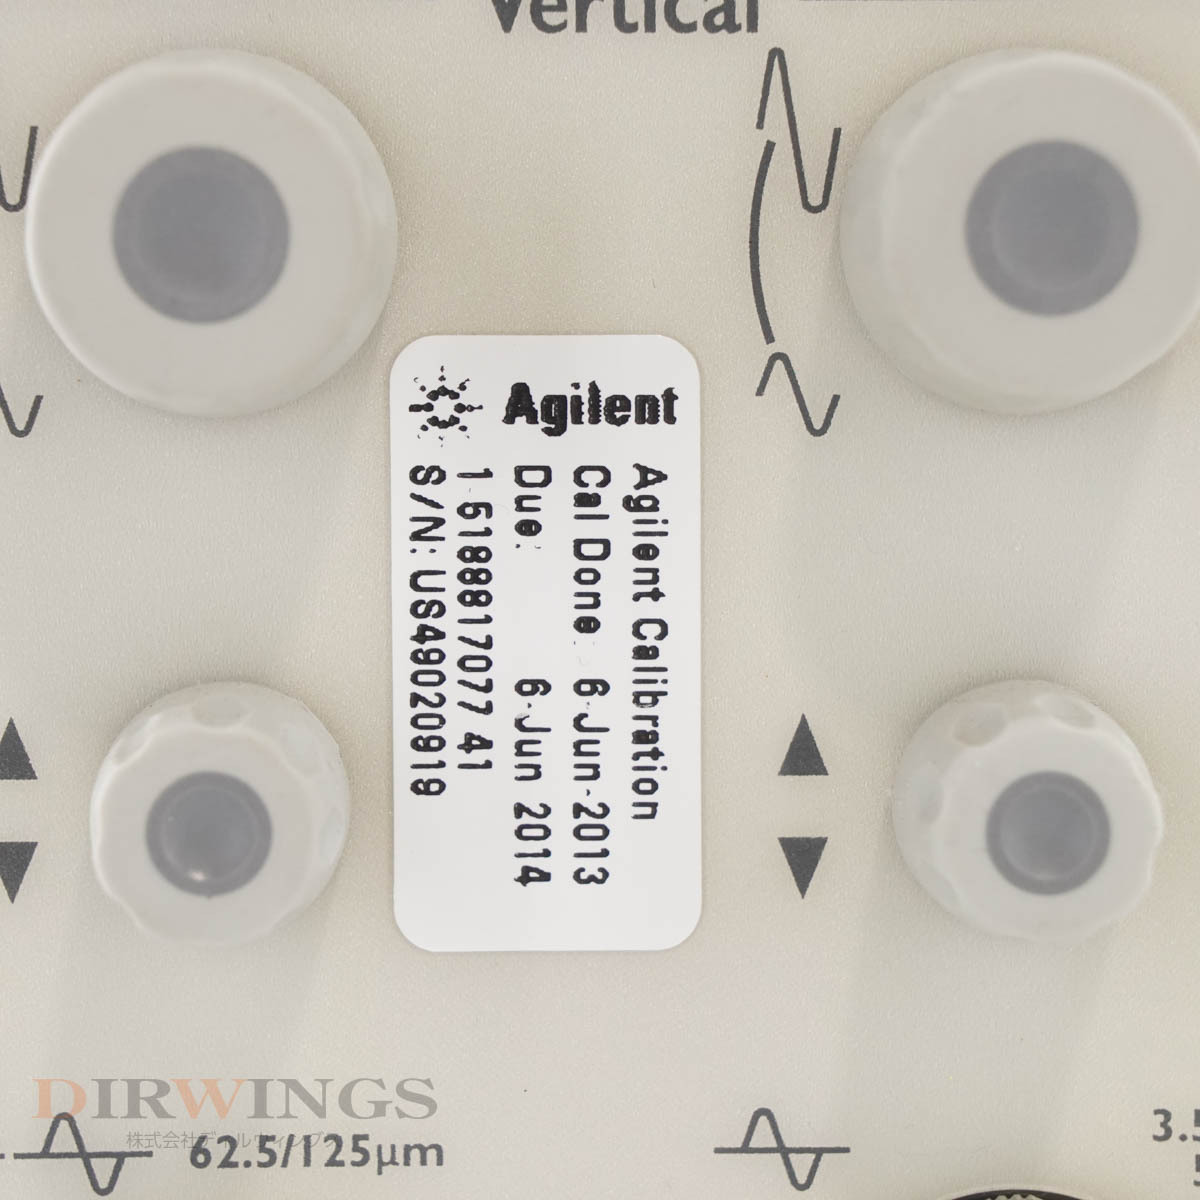 [DW] 8日保証 86105C Agilent OPT 200 750-1650nm CFG014 アジレント hp Keysight Optical/Electrical Sampling Module 光/...[05791-1432]の画像5